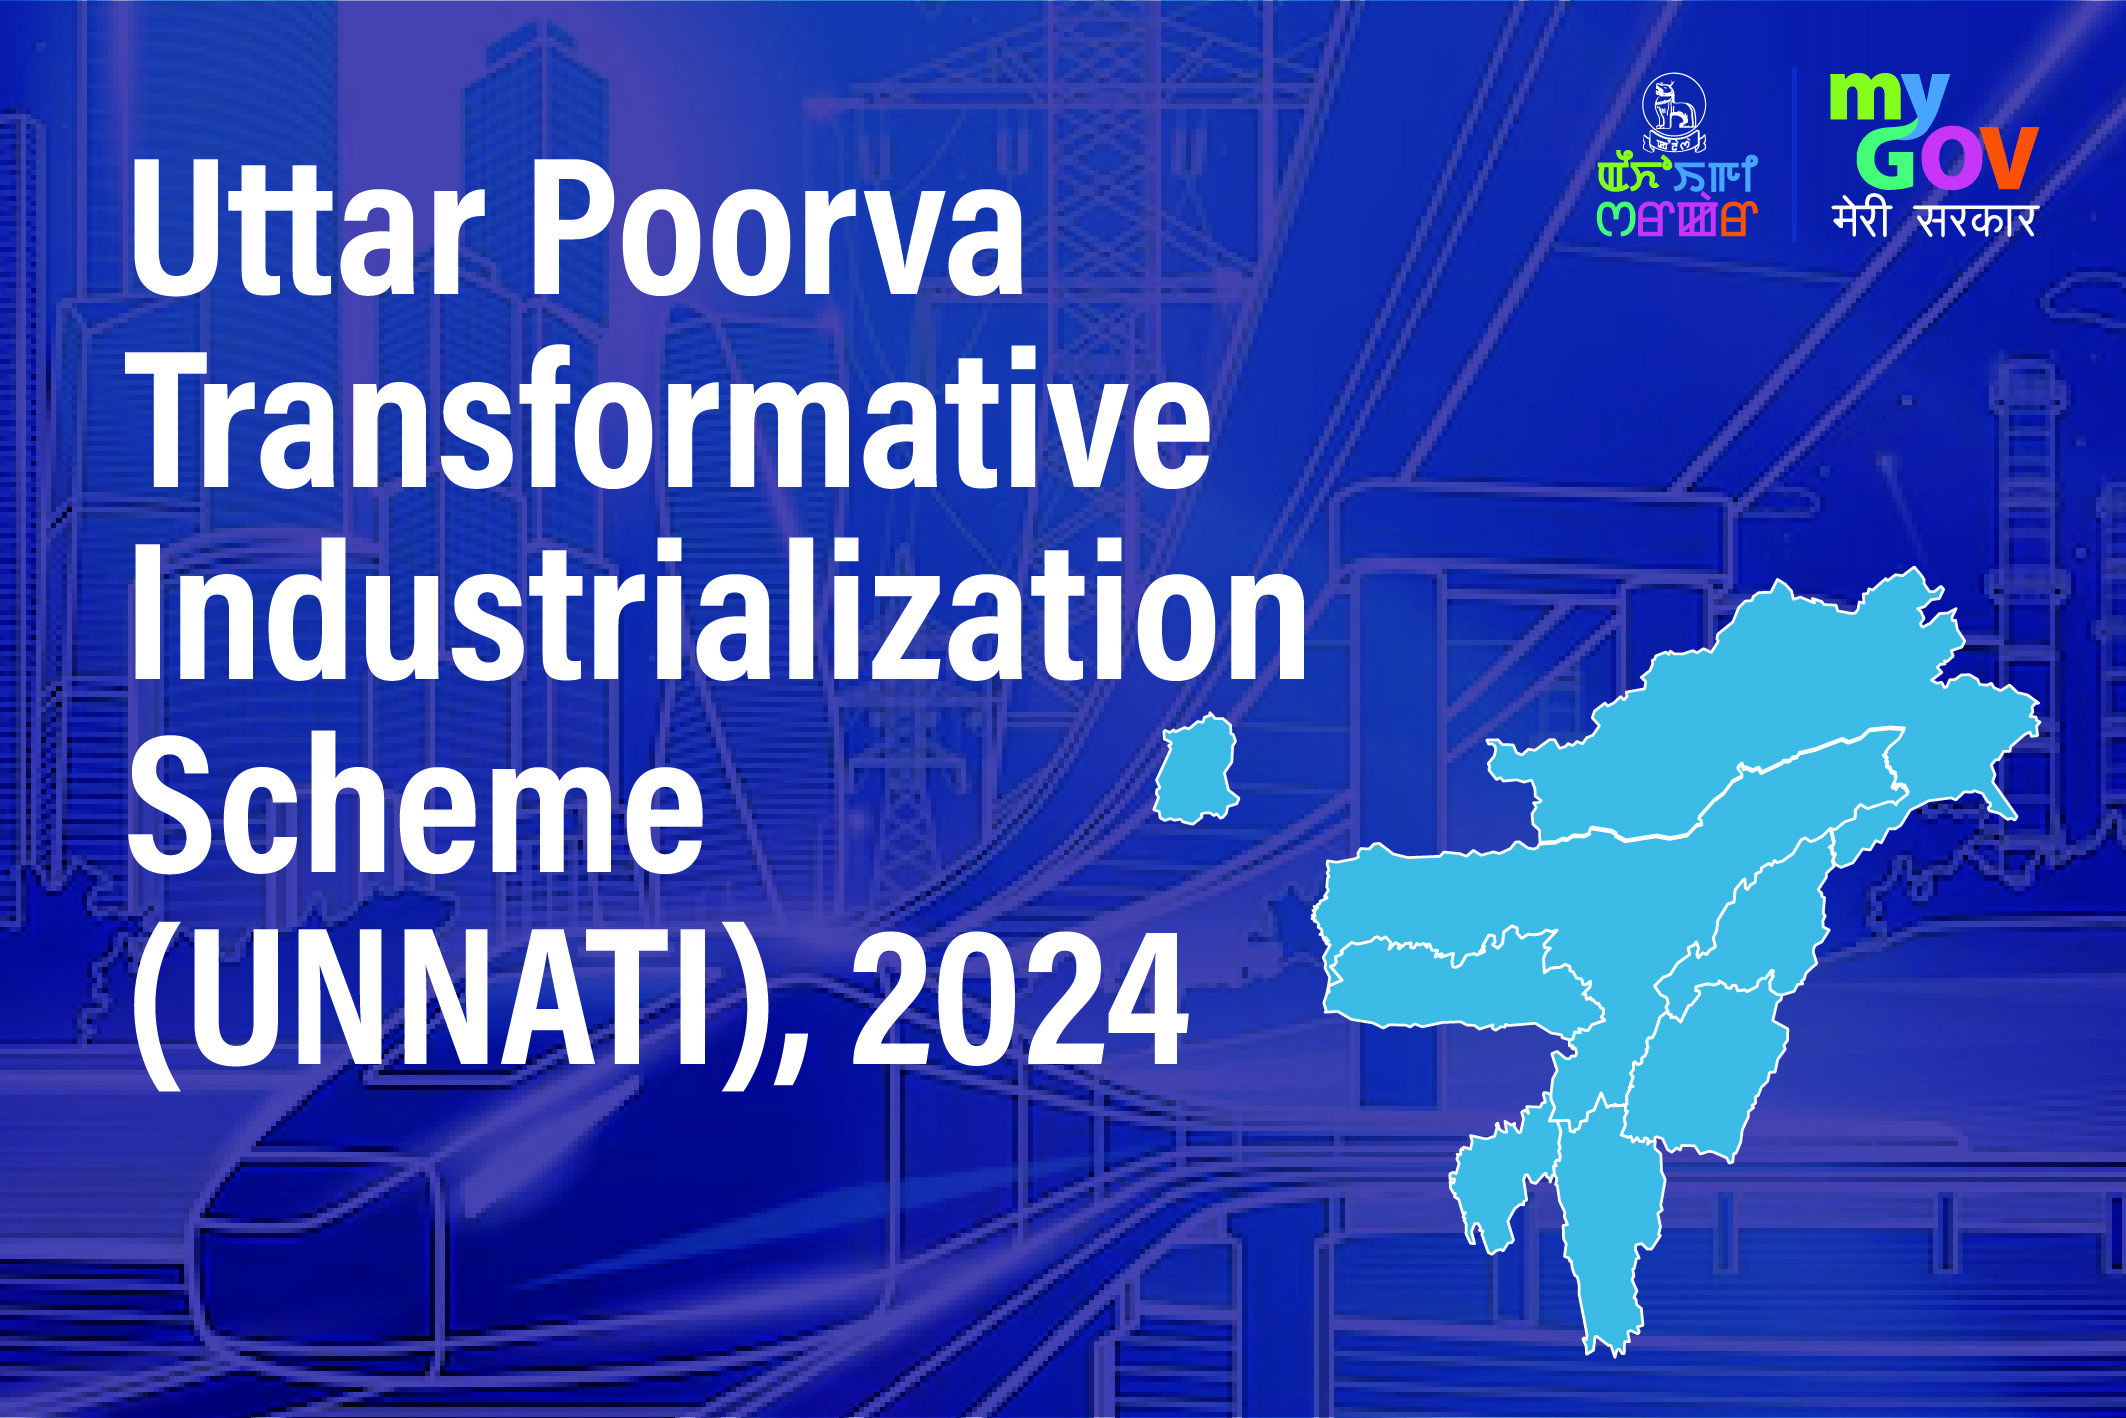 Uttar Poorva transformative industrialization scheme (Unnati), 2024